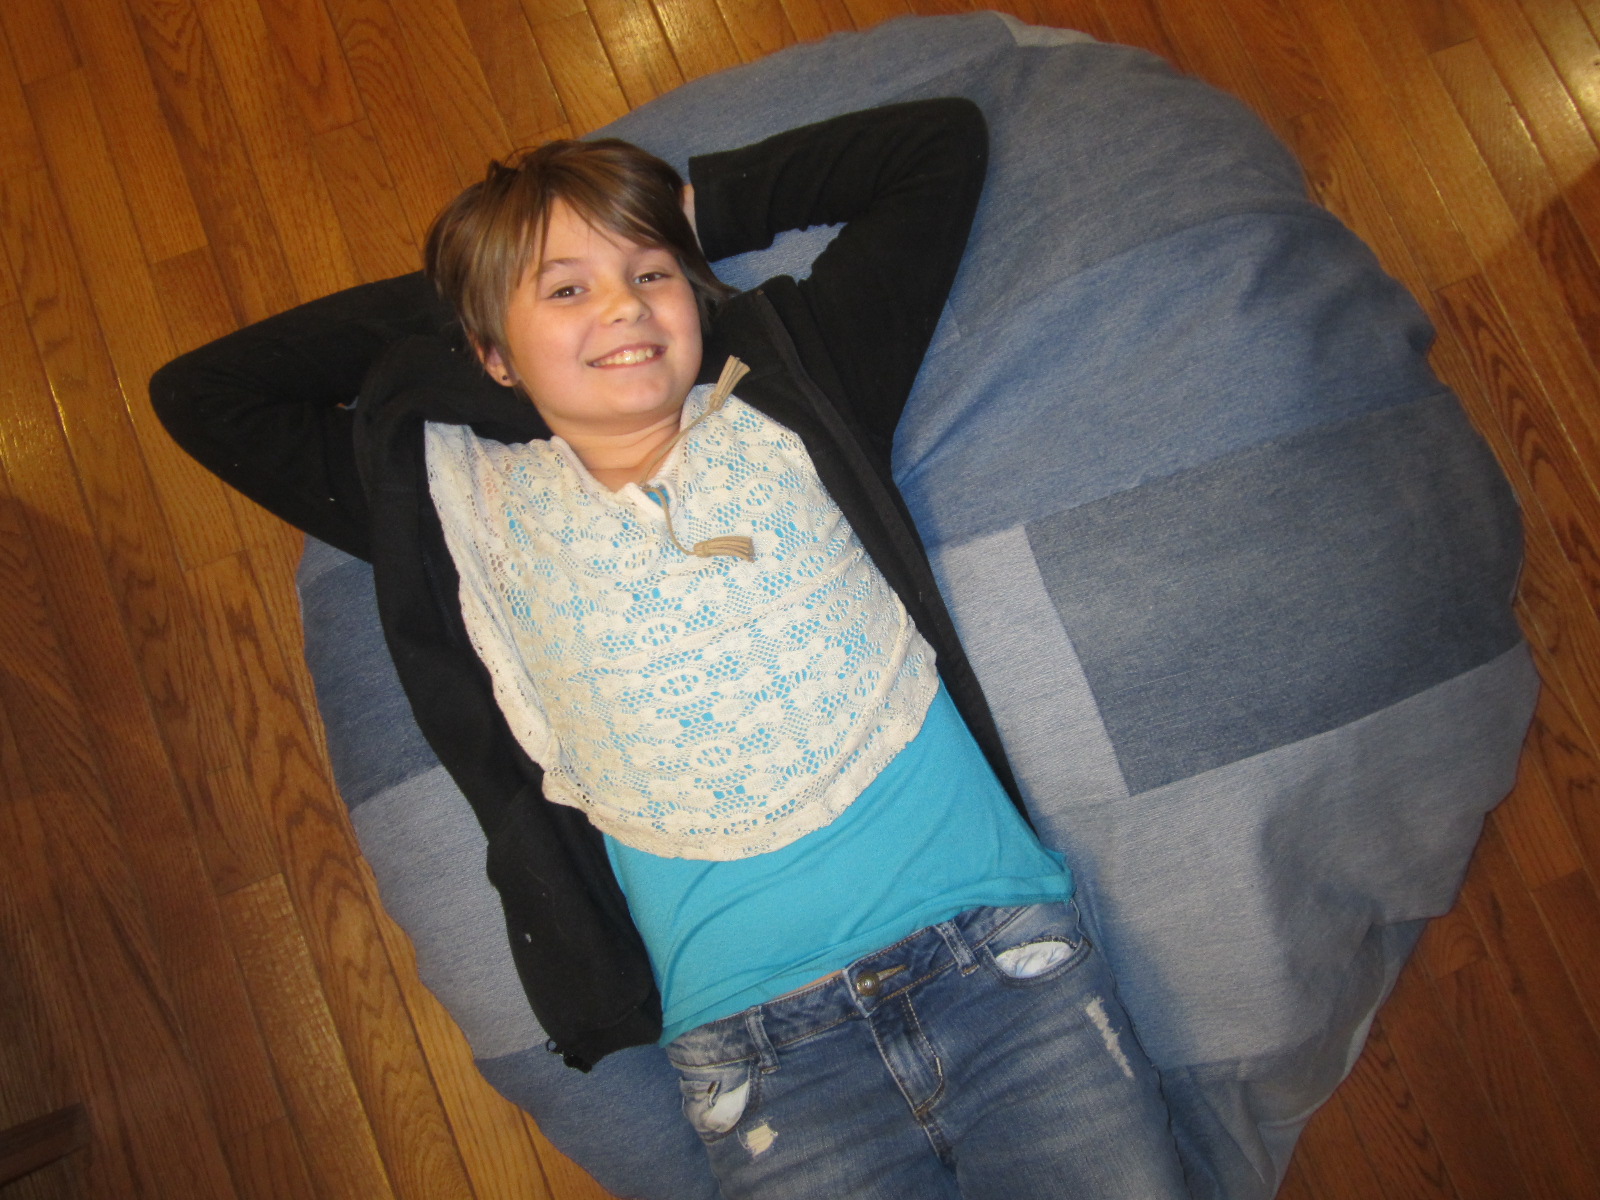 Nora tests the new Huggle Pod cushion